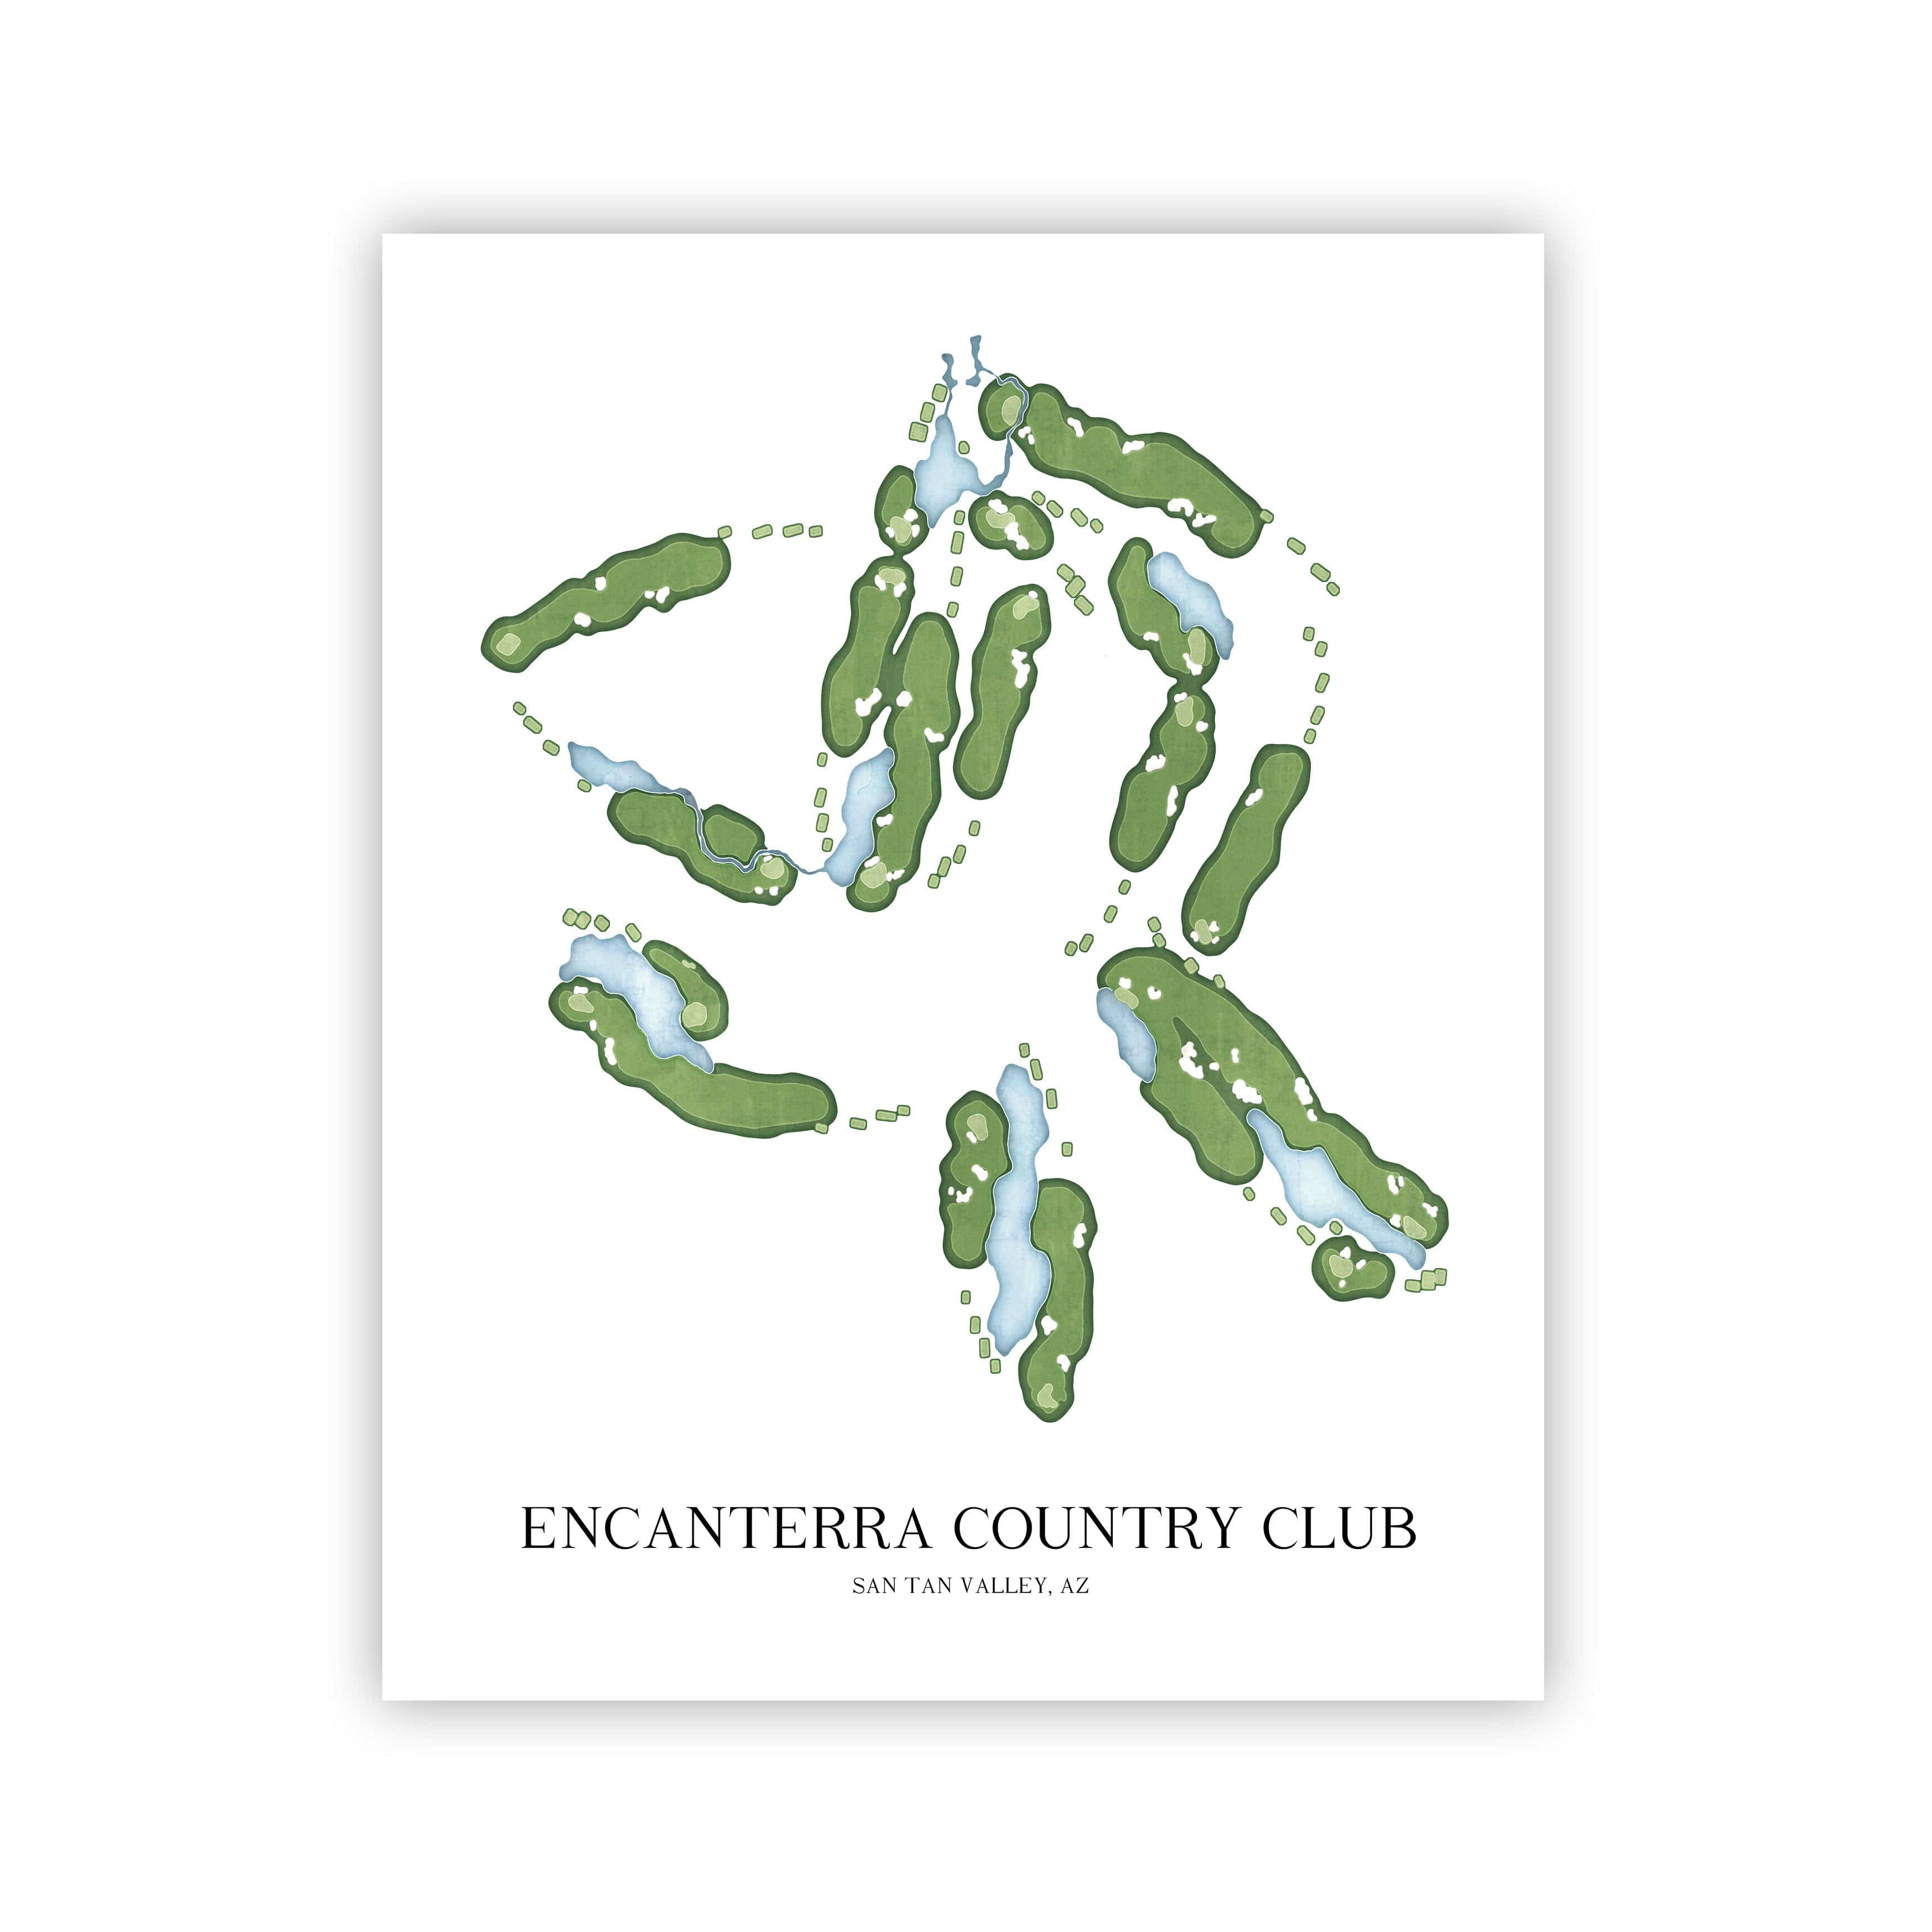 The 19th Hole Golf Shop - Golf Course Prints -  Encanterra Country Club Golf Course Map